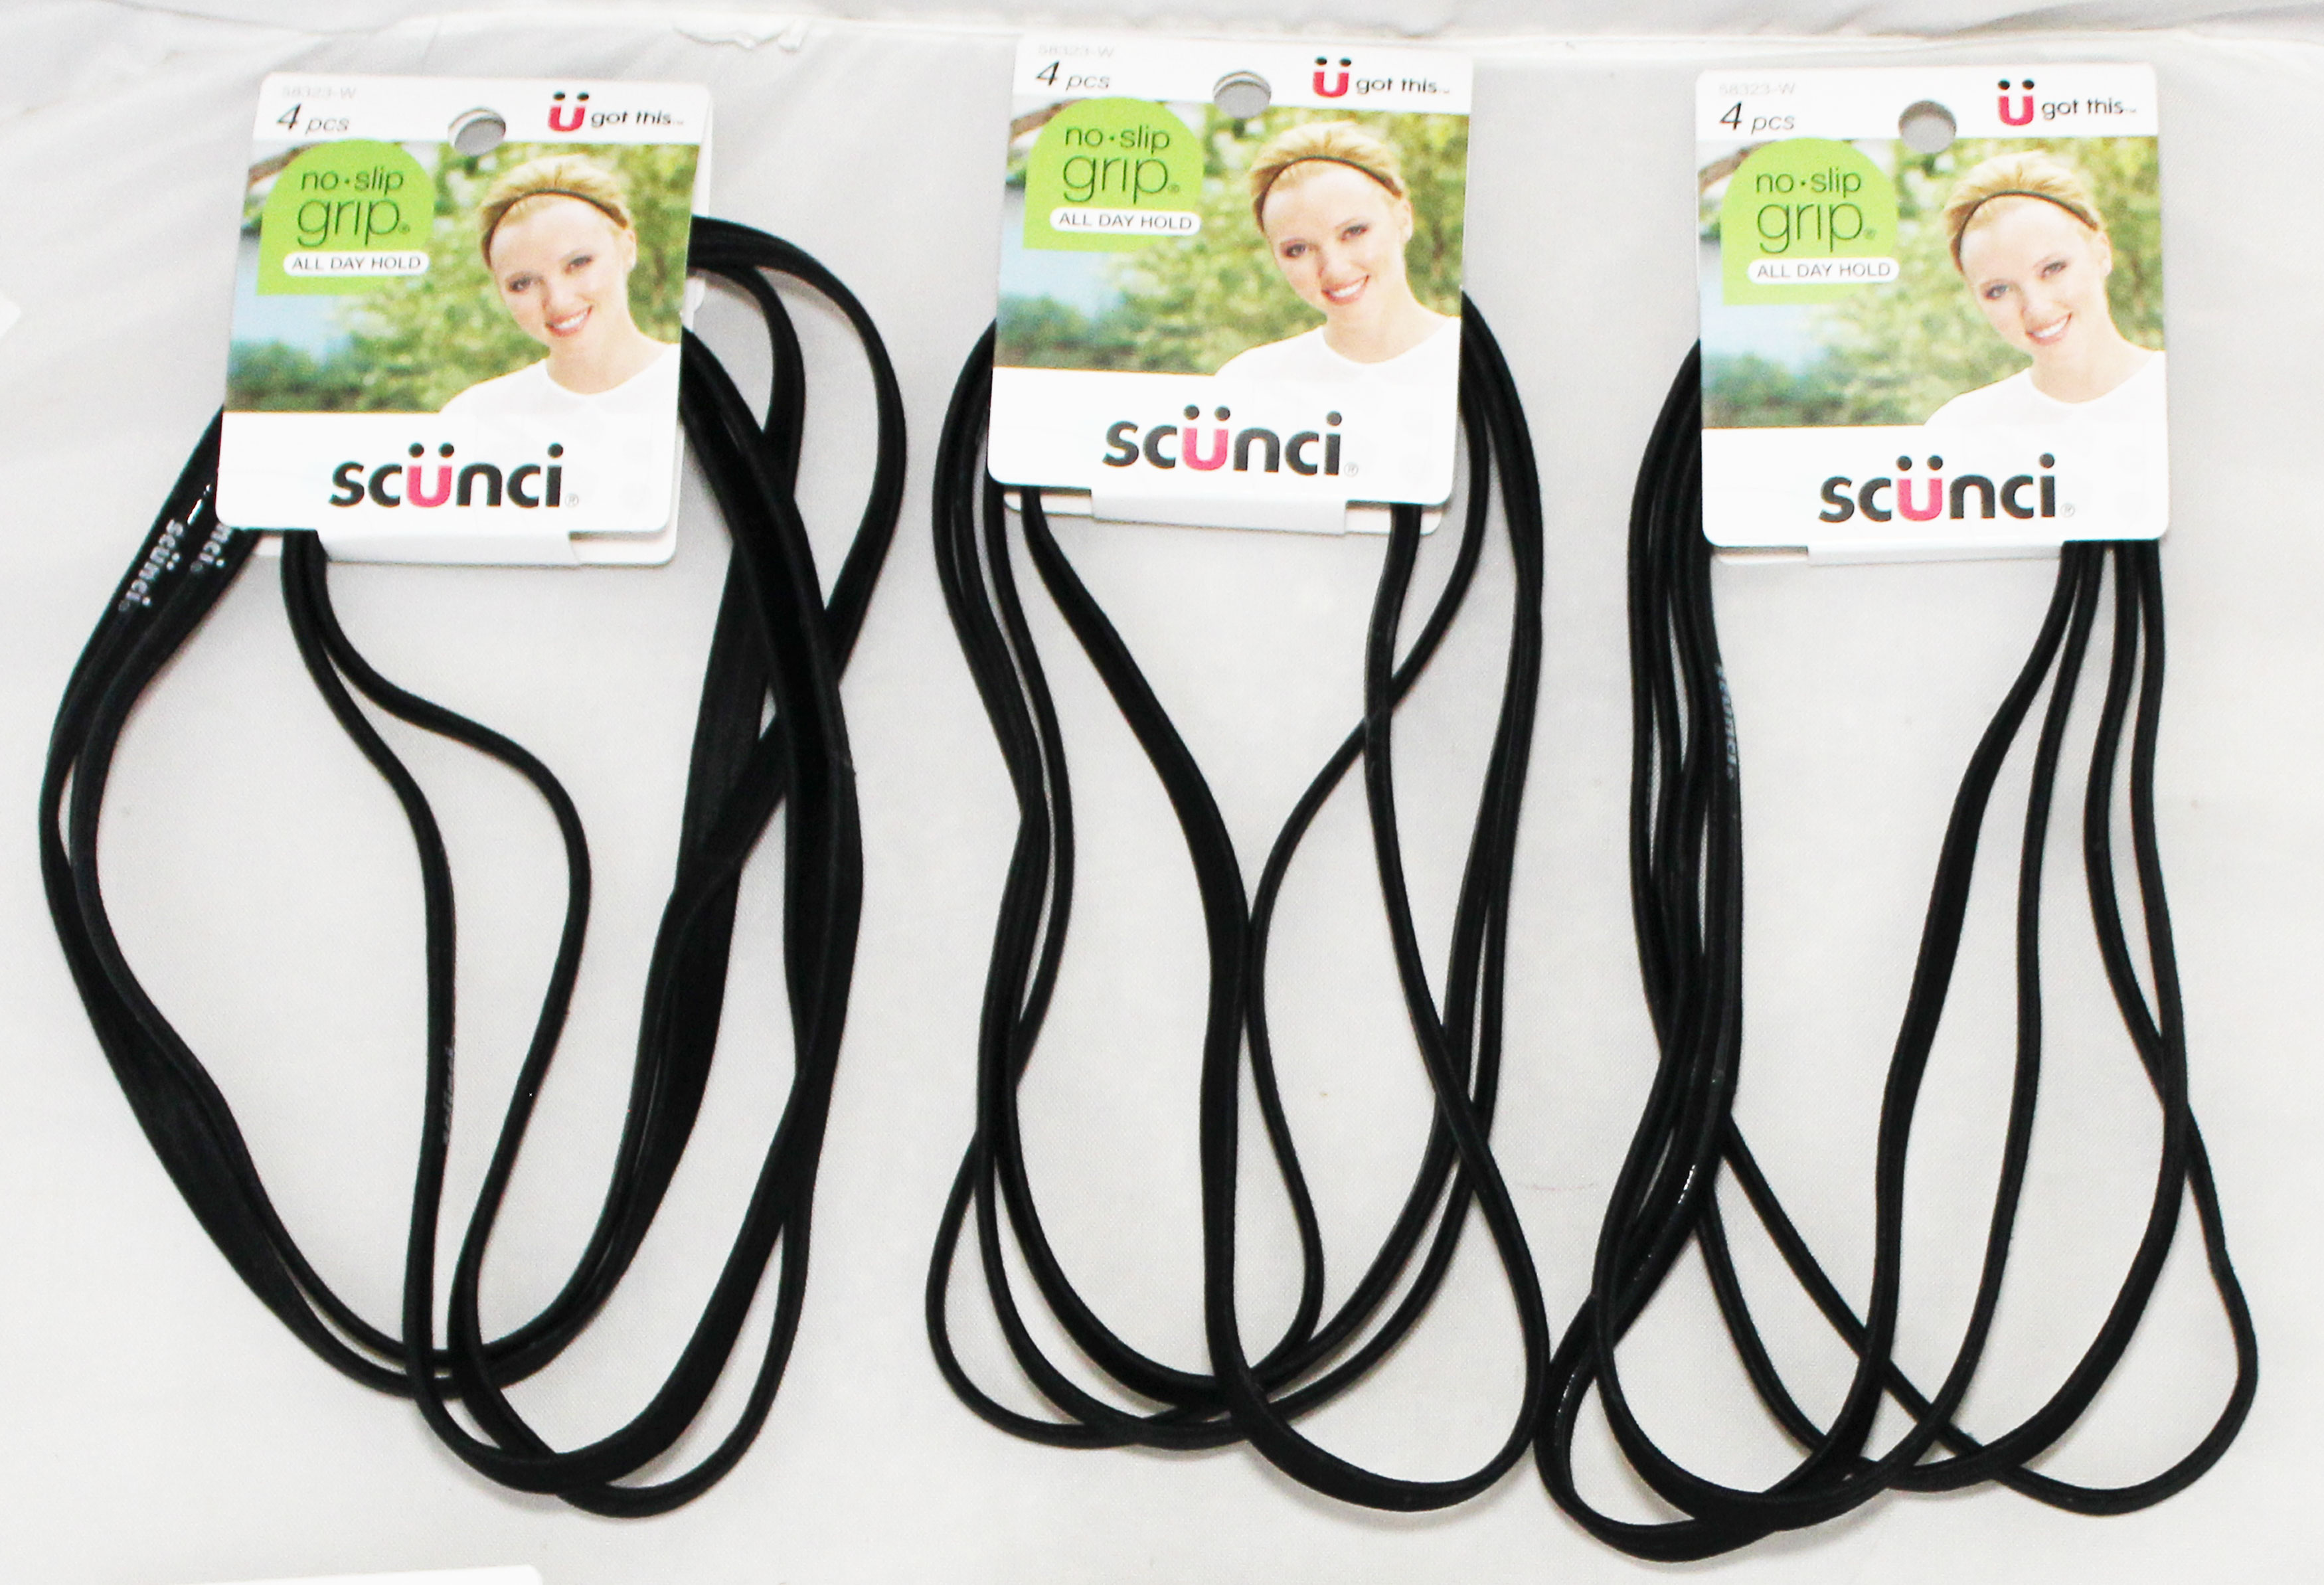 Scunci No Slip Grip Headwrap Headband, 4/card (1 Pack) - Click Image to Close